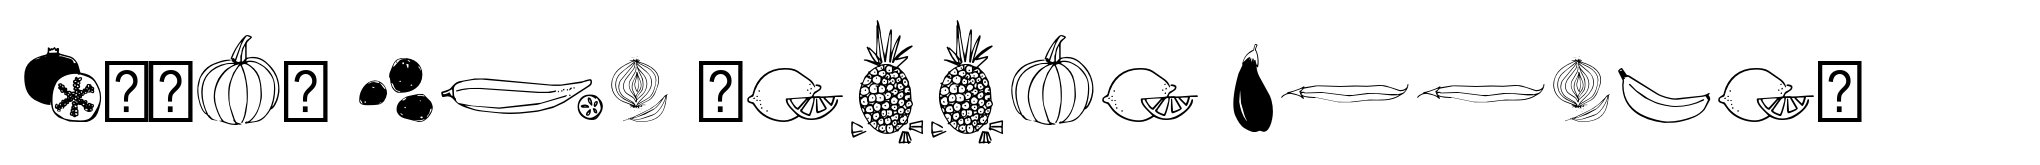 Fruit And Veggie Doodles image